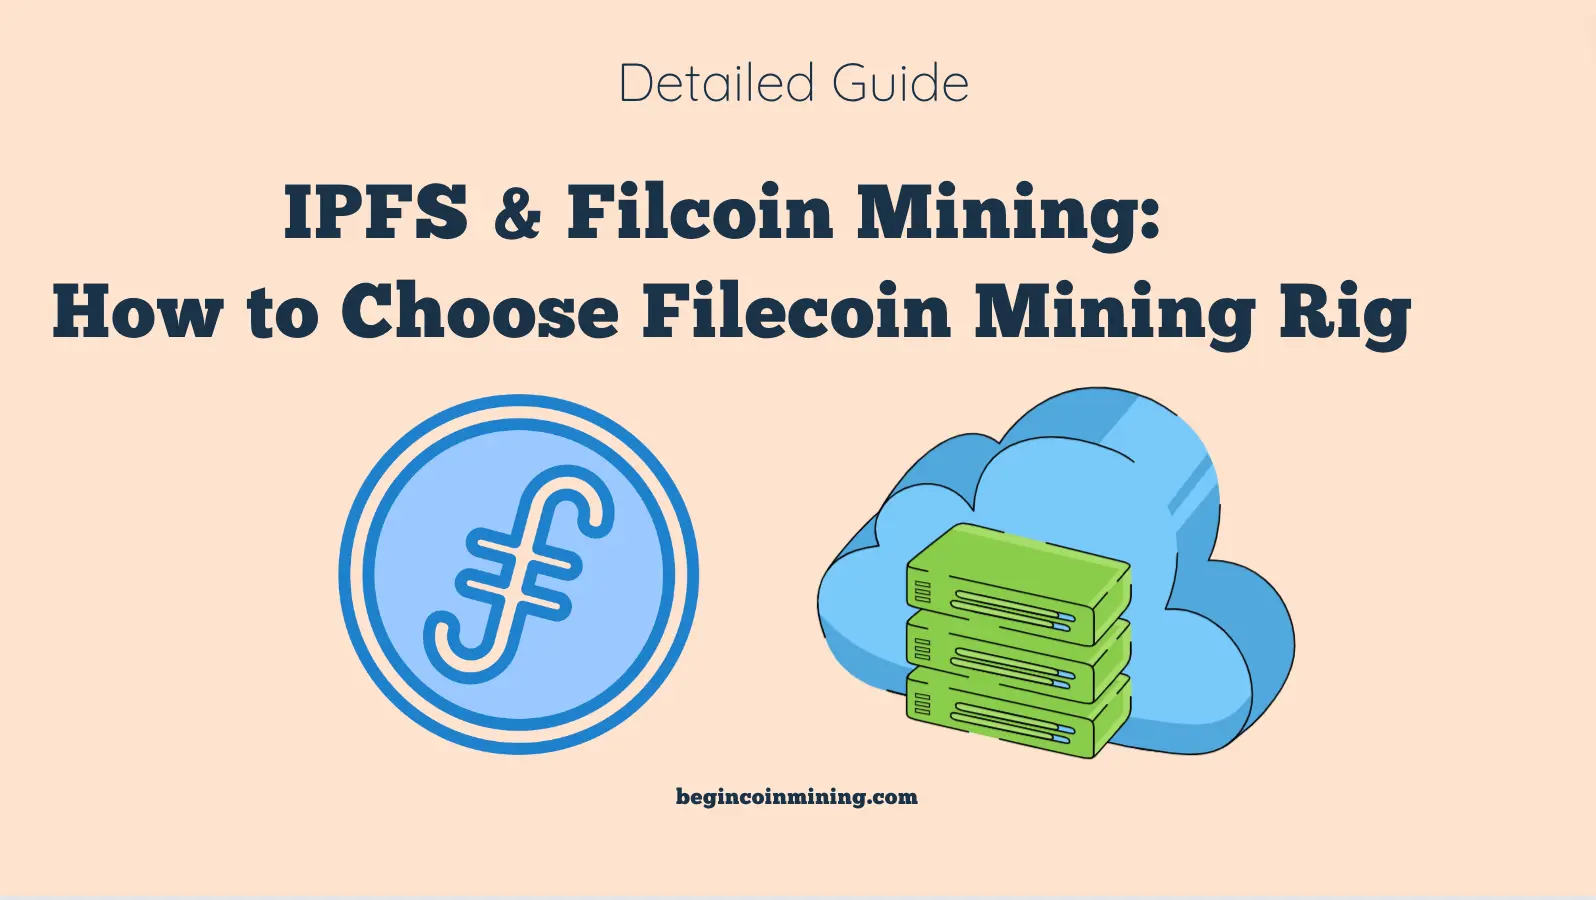 IPFS & Filcoin Mining- How to Choose Filecoin Mining Rig